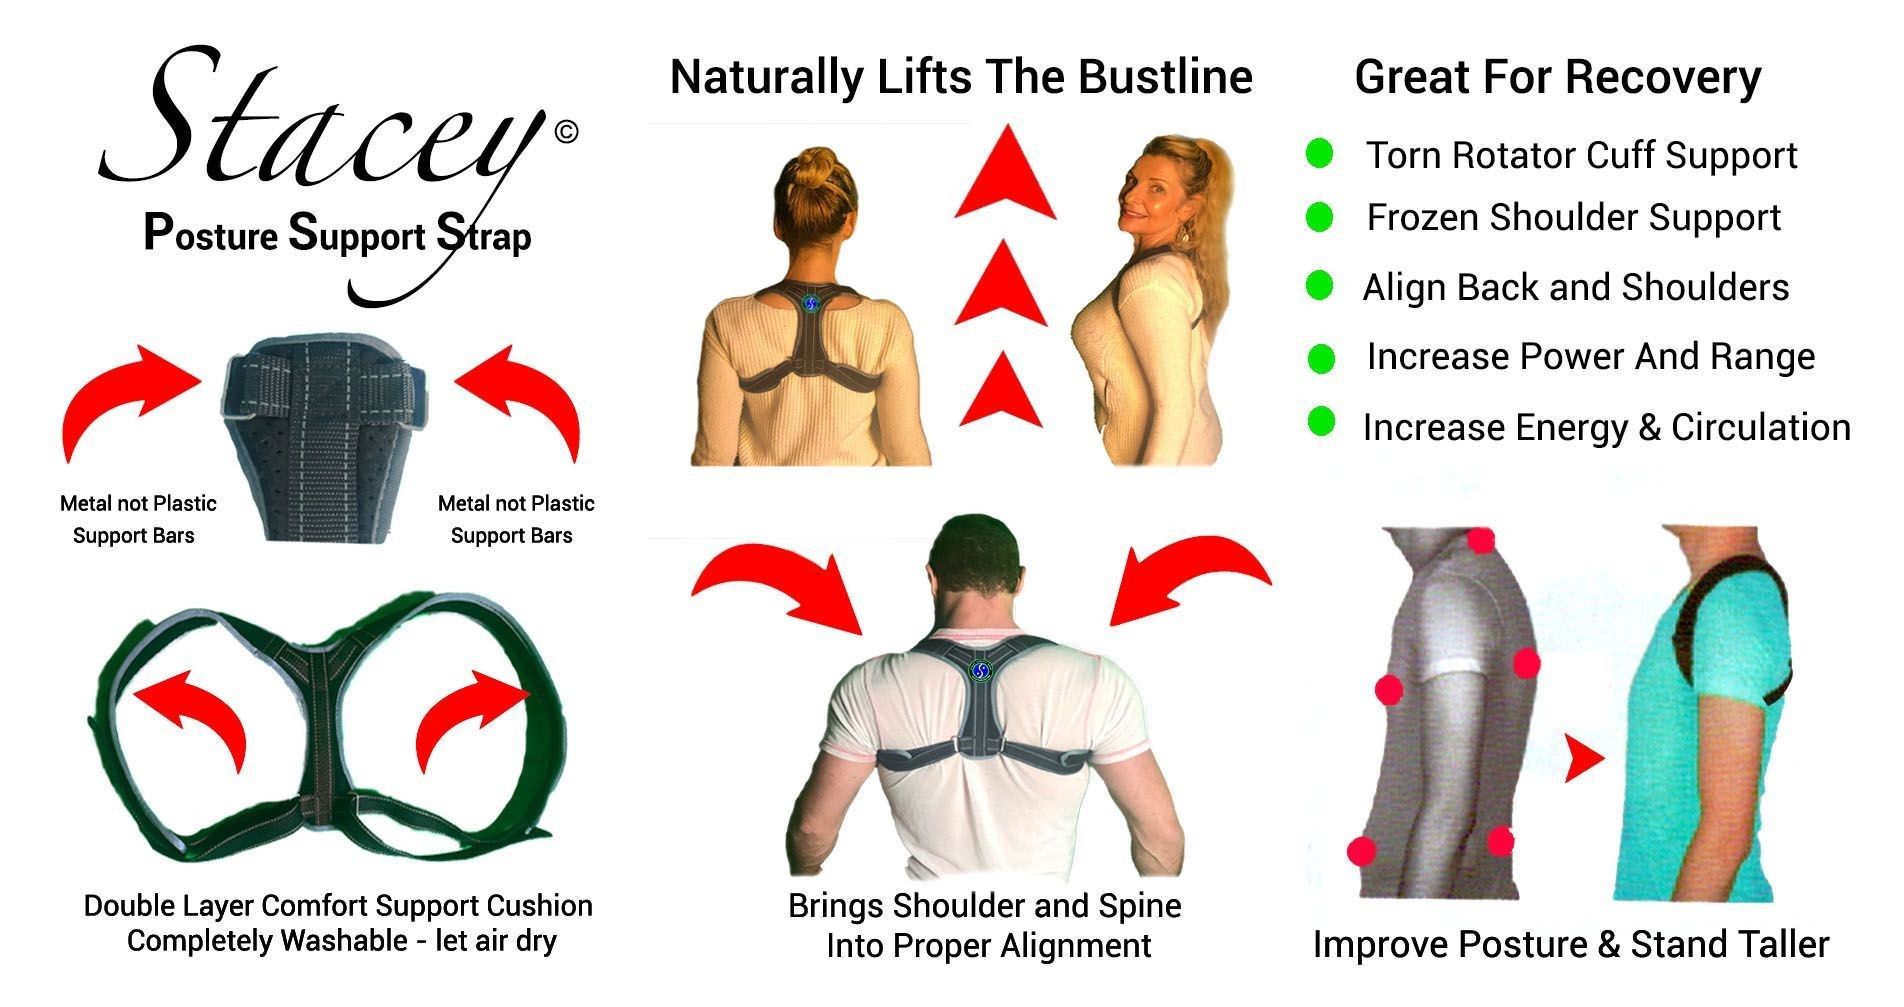 Stacey Posture Support Strap designed t o immediately improve posture & should, neck & back support